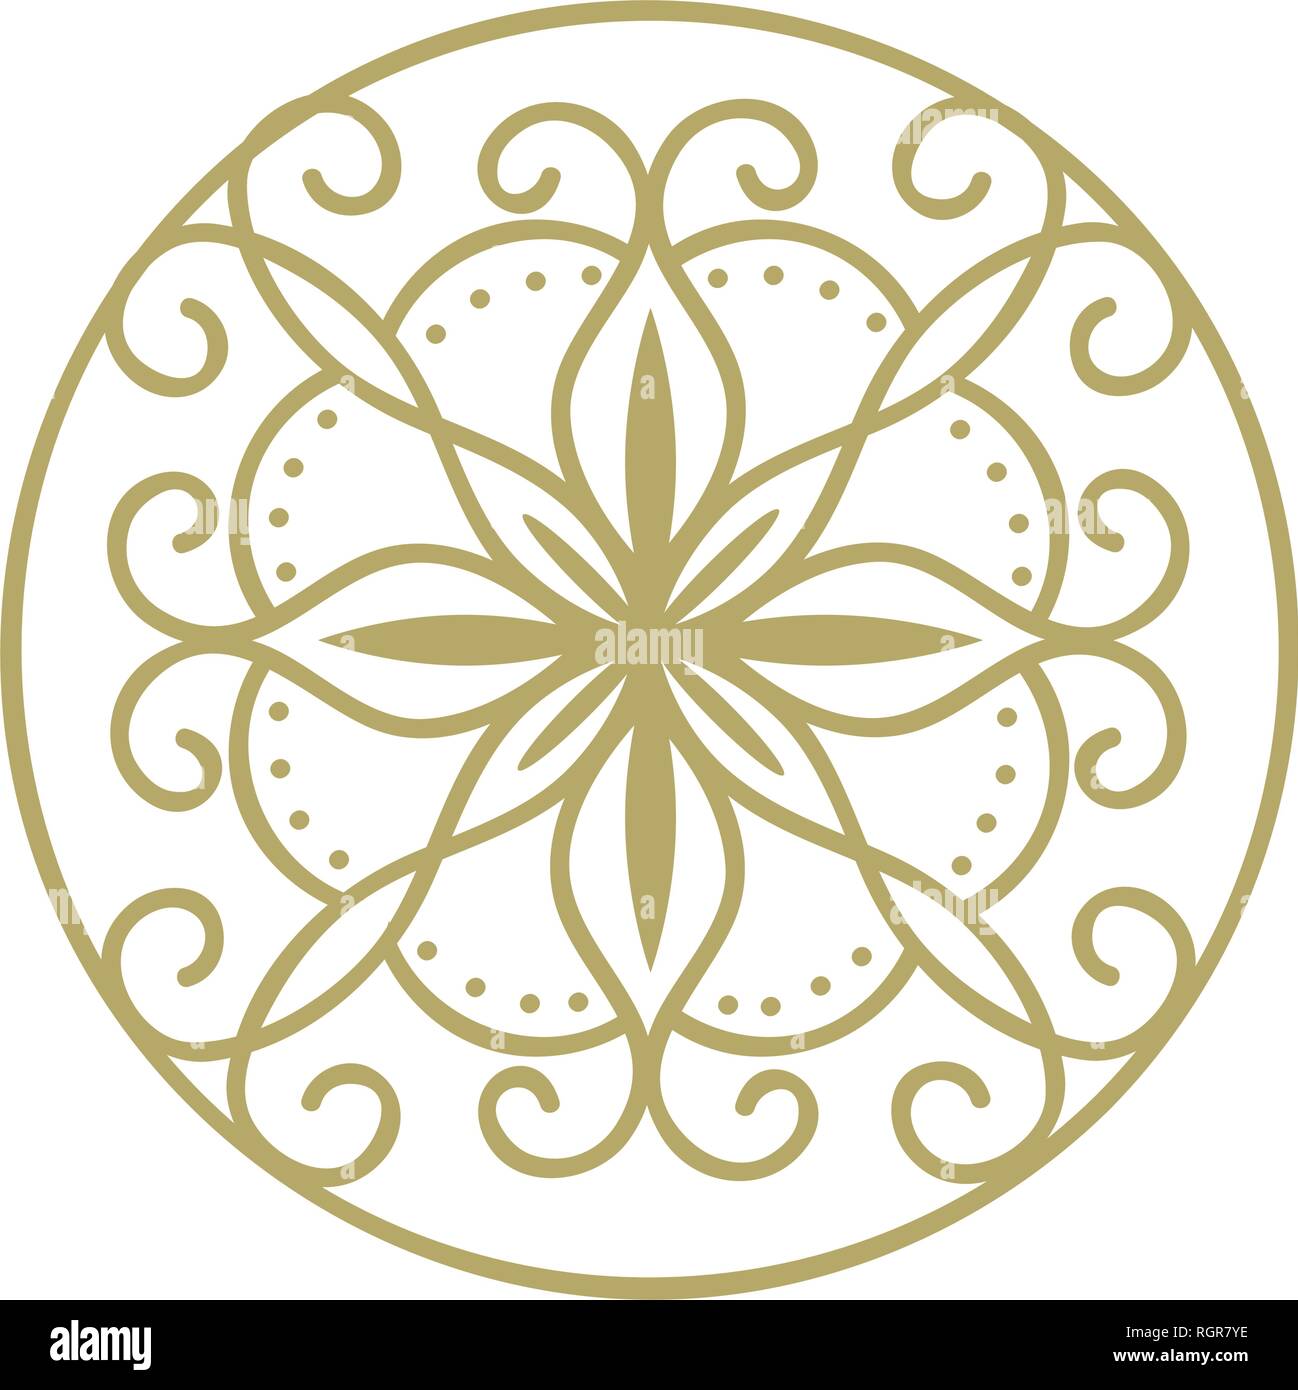 Abstrakt floral Logo. Orientalische Muster Stock Vektor